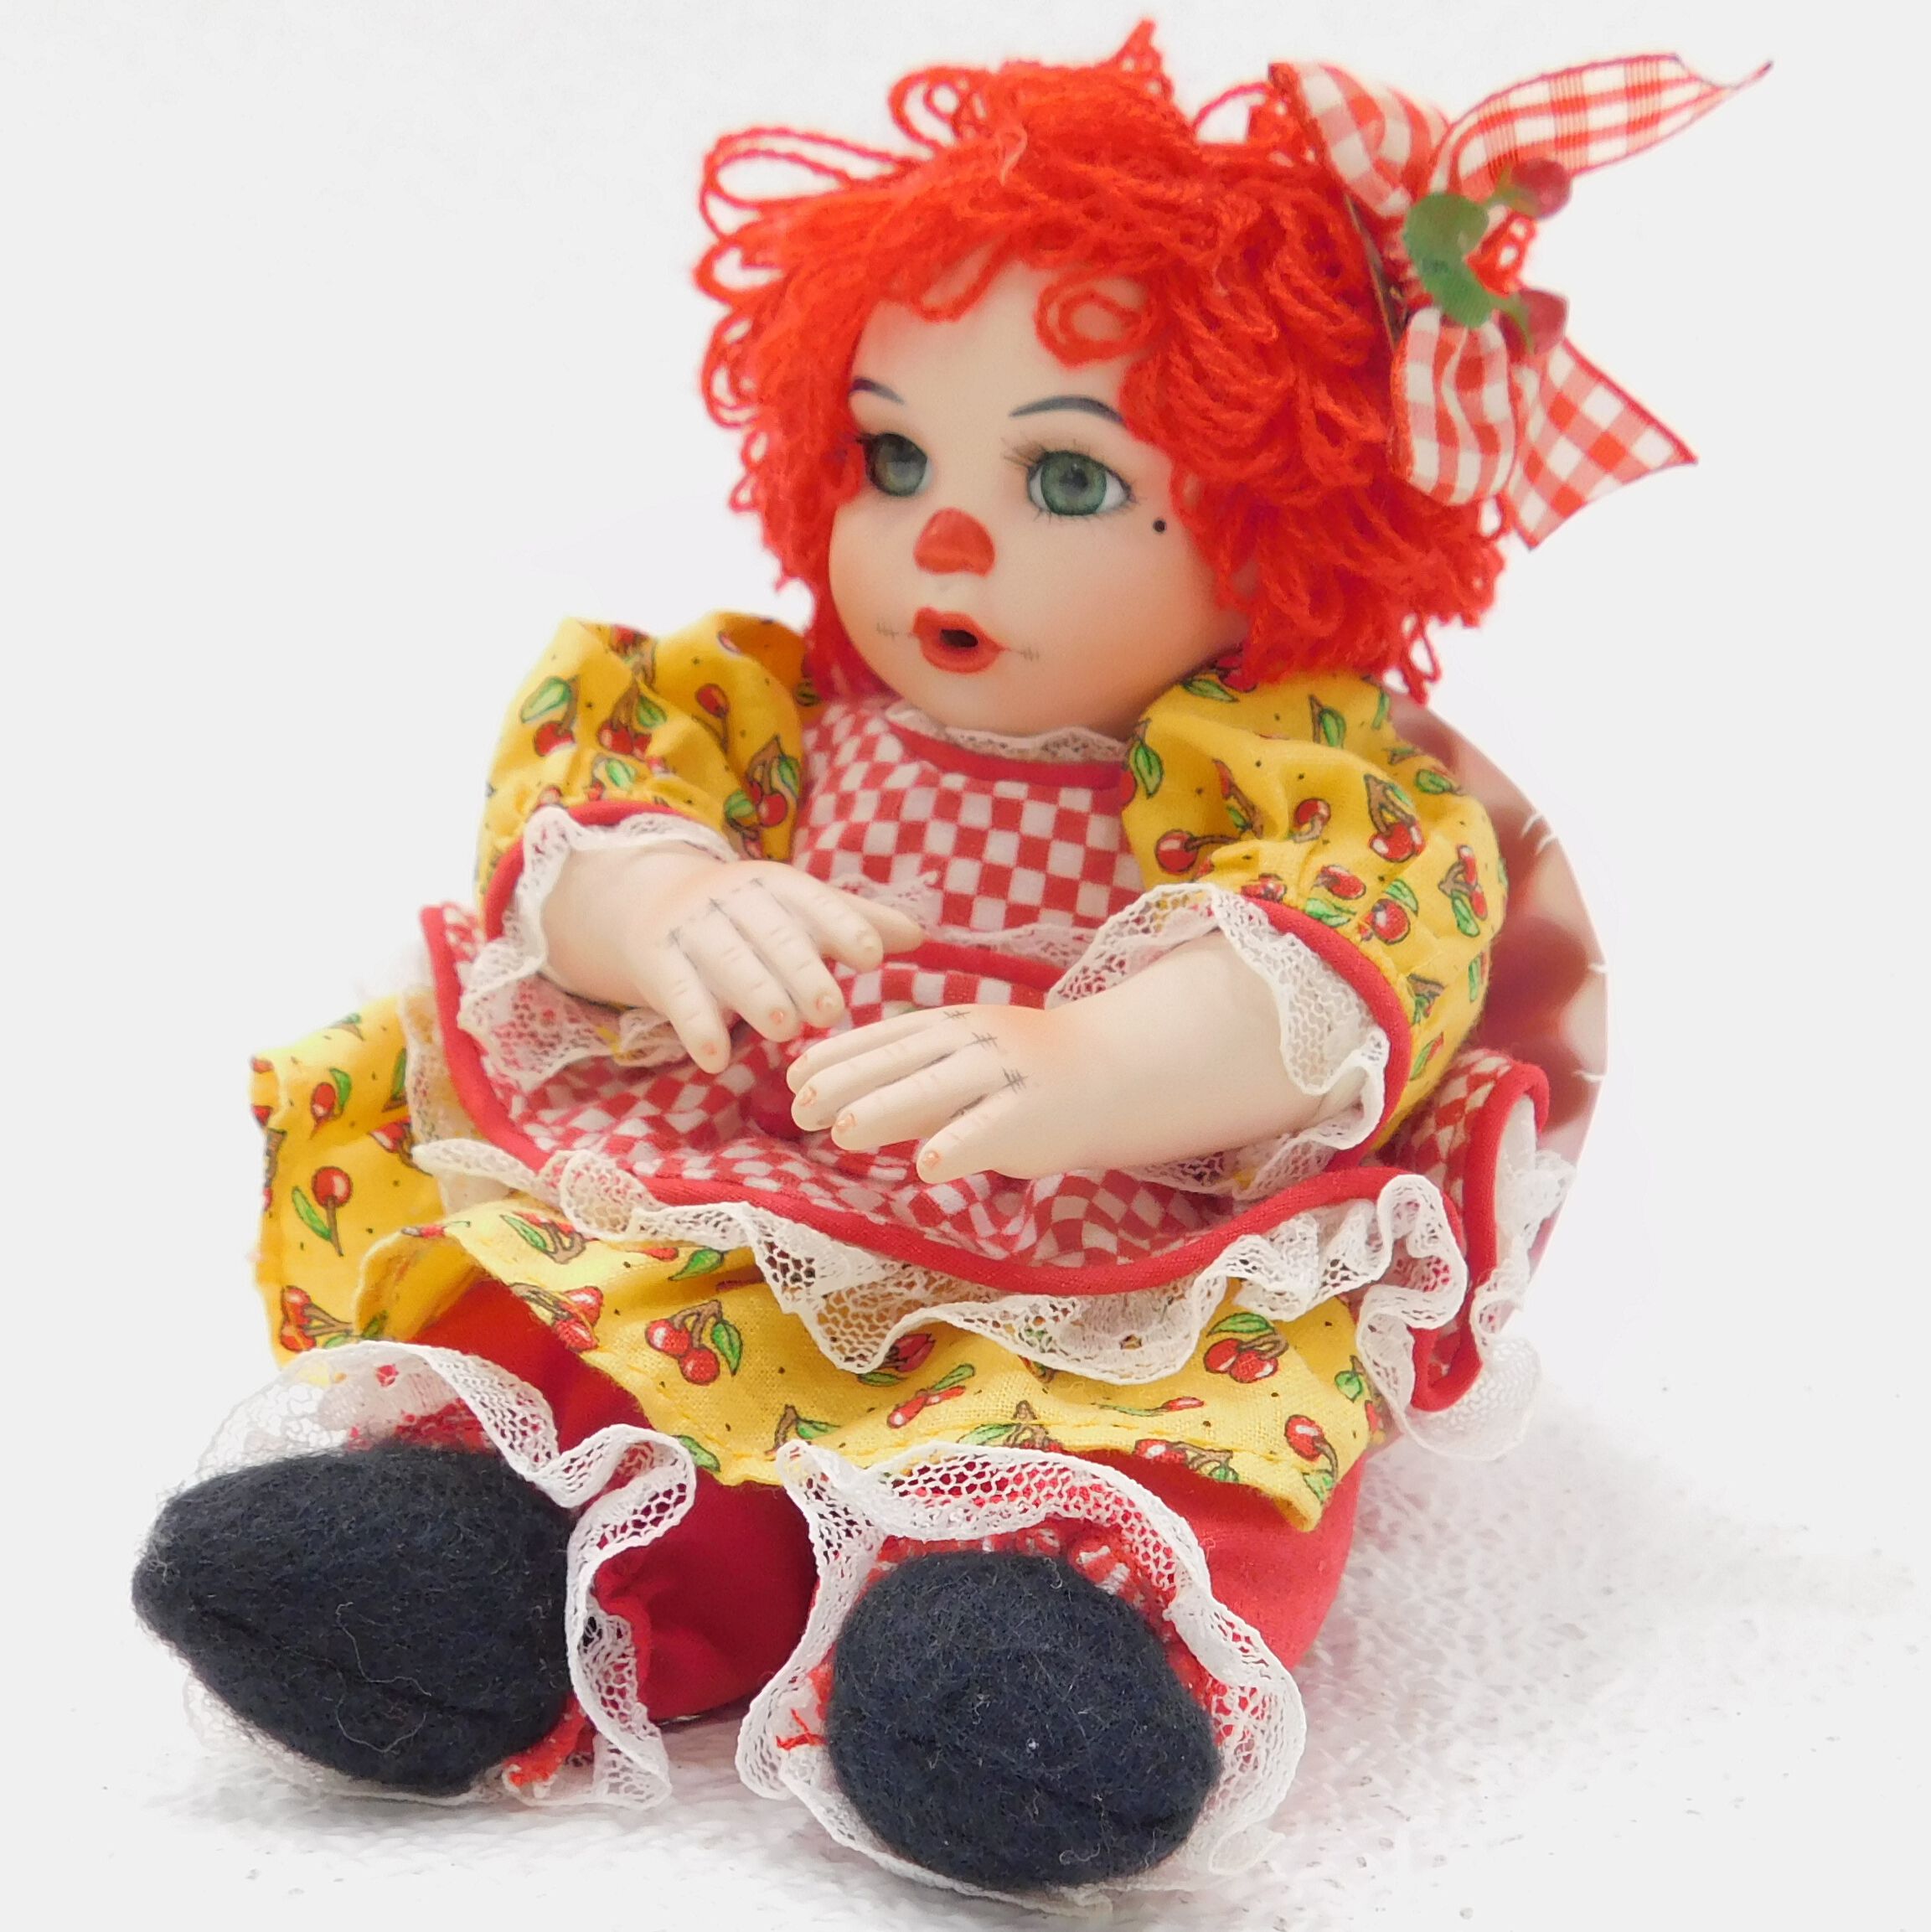 ☆即日発送対応☆ Marie Osmond Disney Christmas Baby Belle Porcelain Toddler Doll 